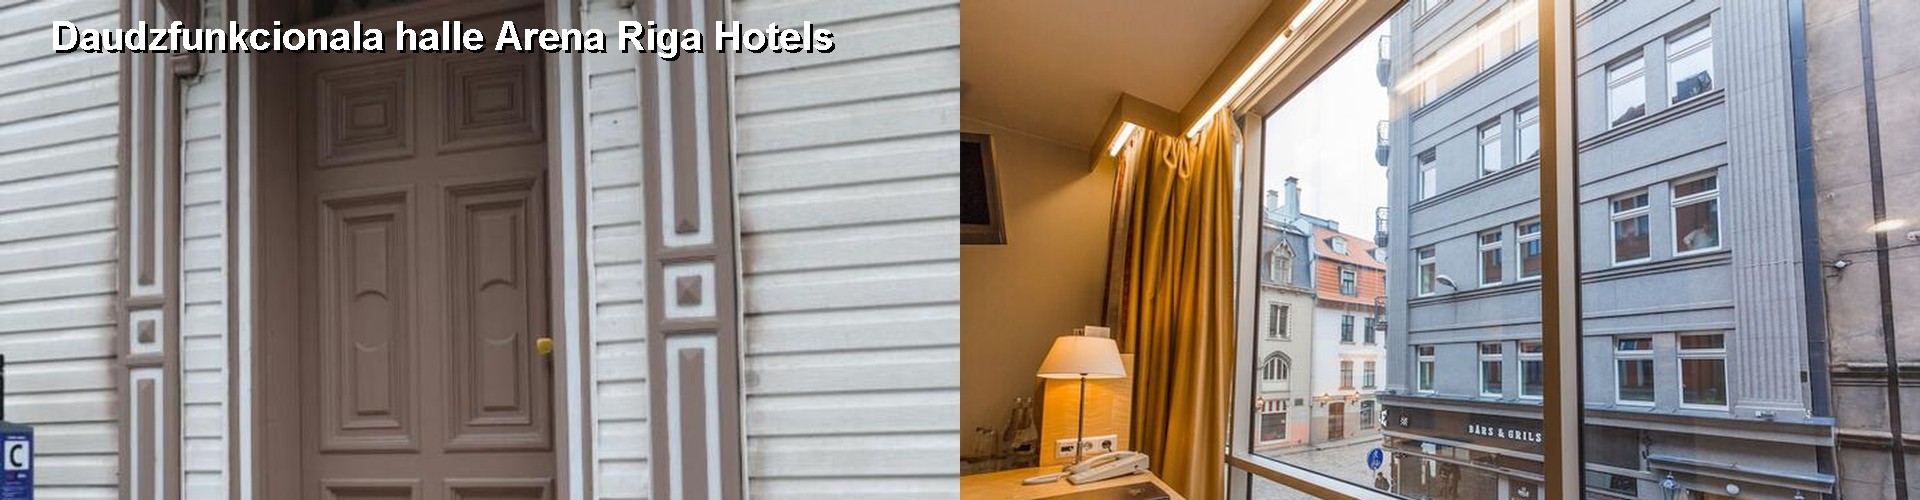 5 Best Hotels near Daudzfunkcionala halle Arena Riga